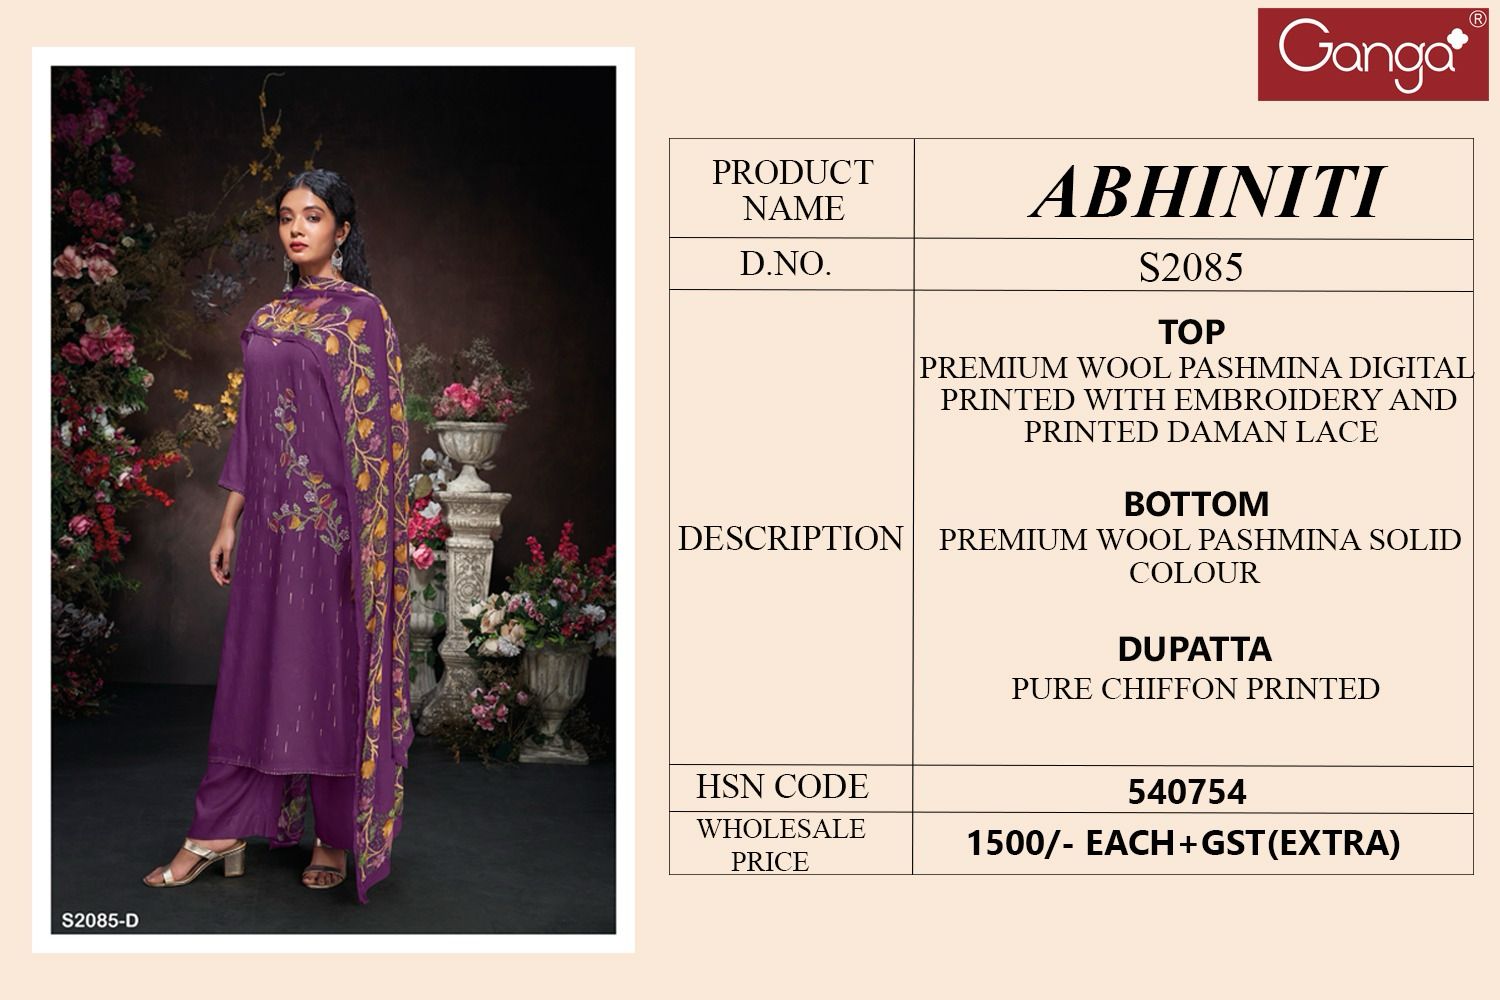 S2085-Abcd Abhiniti Ganga Pashmina Suits